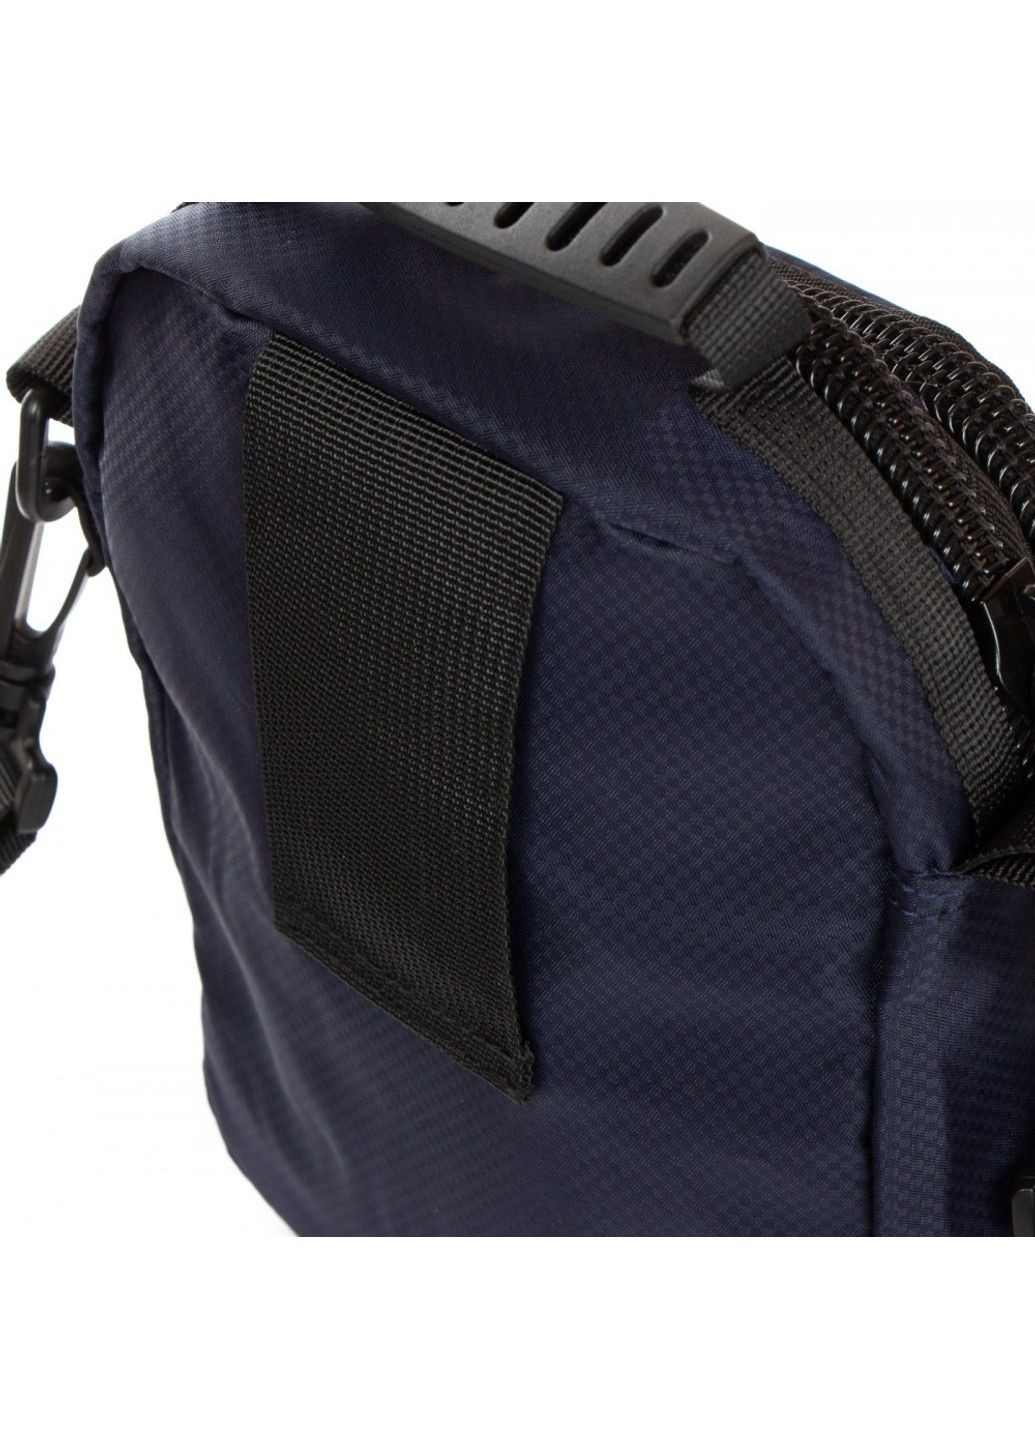 Мужская тканевая сумка через плечо 61028 blue Lanpad (284667903)